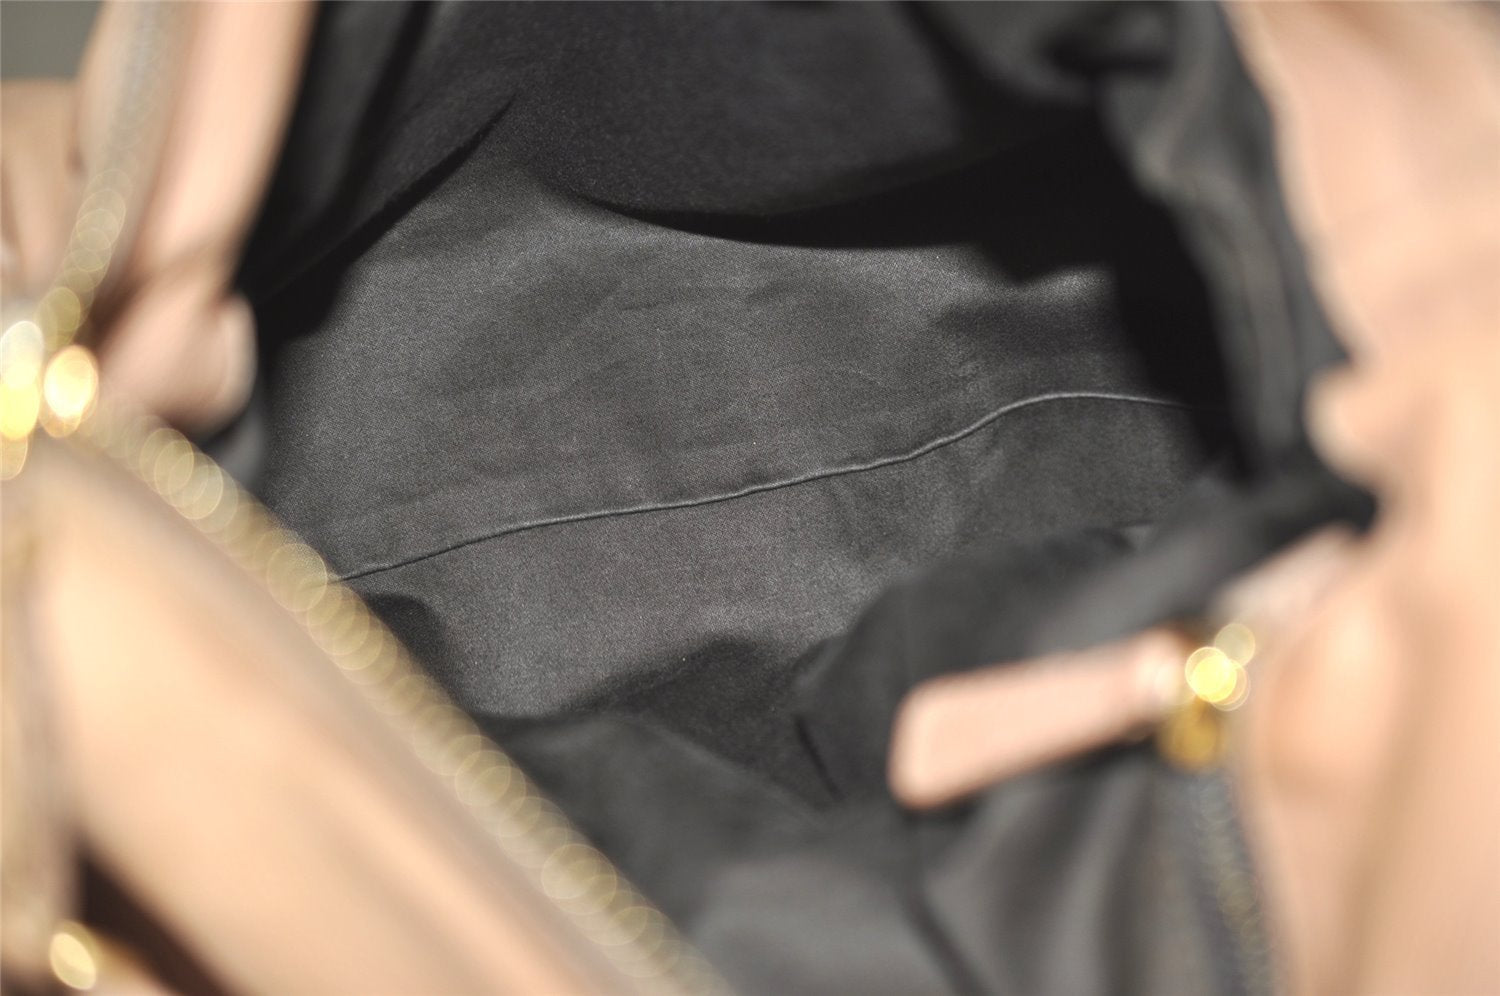 Authentic MIU MIU Ribbon Leather 2Way Shoulder Hand Bag Purse Beige 1475J